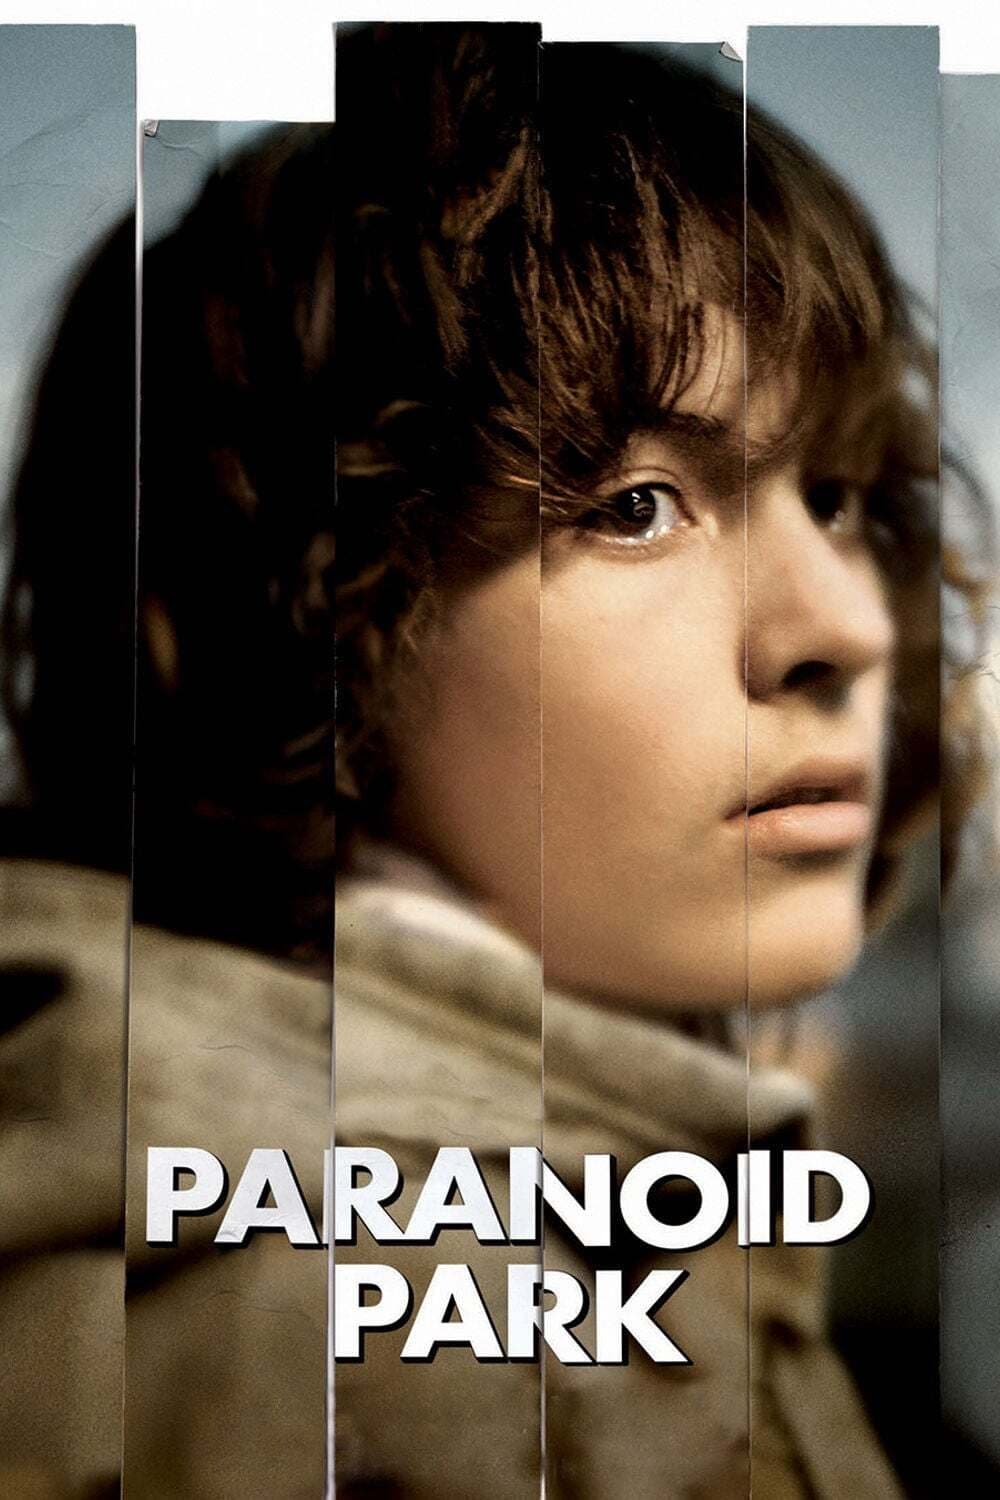 Paranoid Park [HD] (2007)